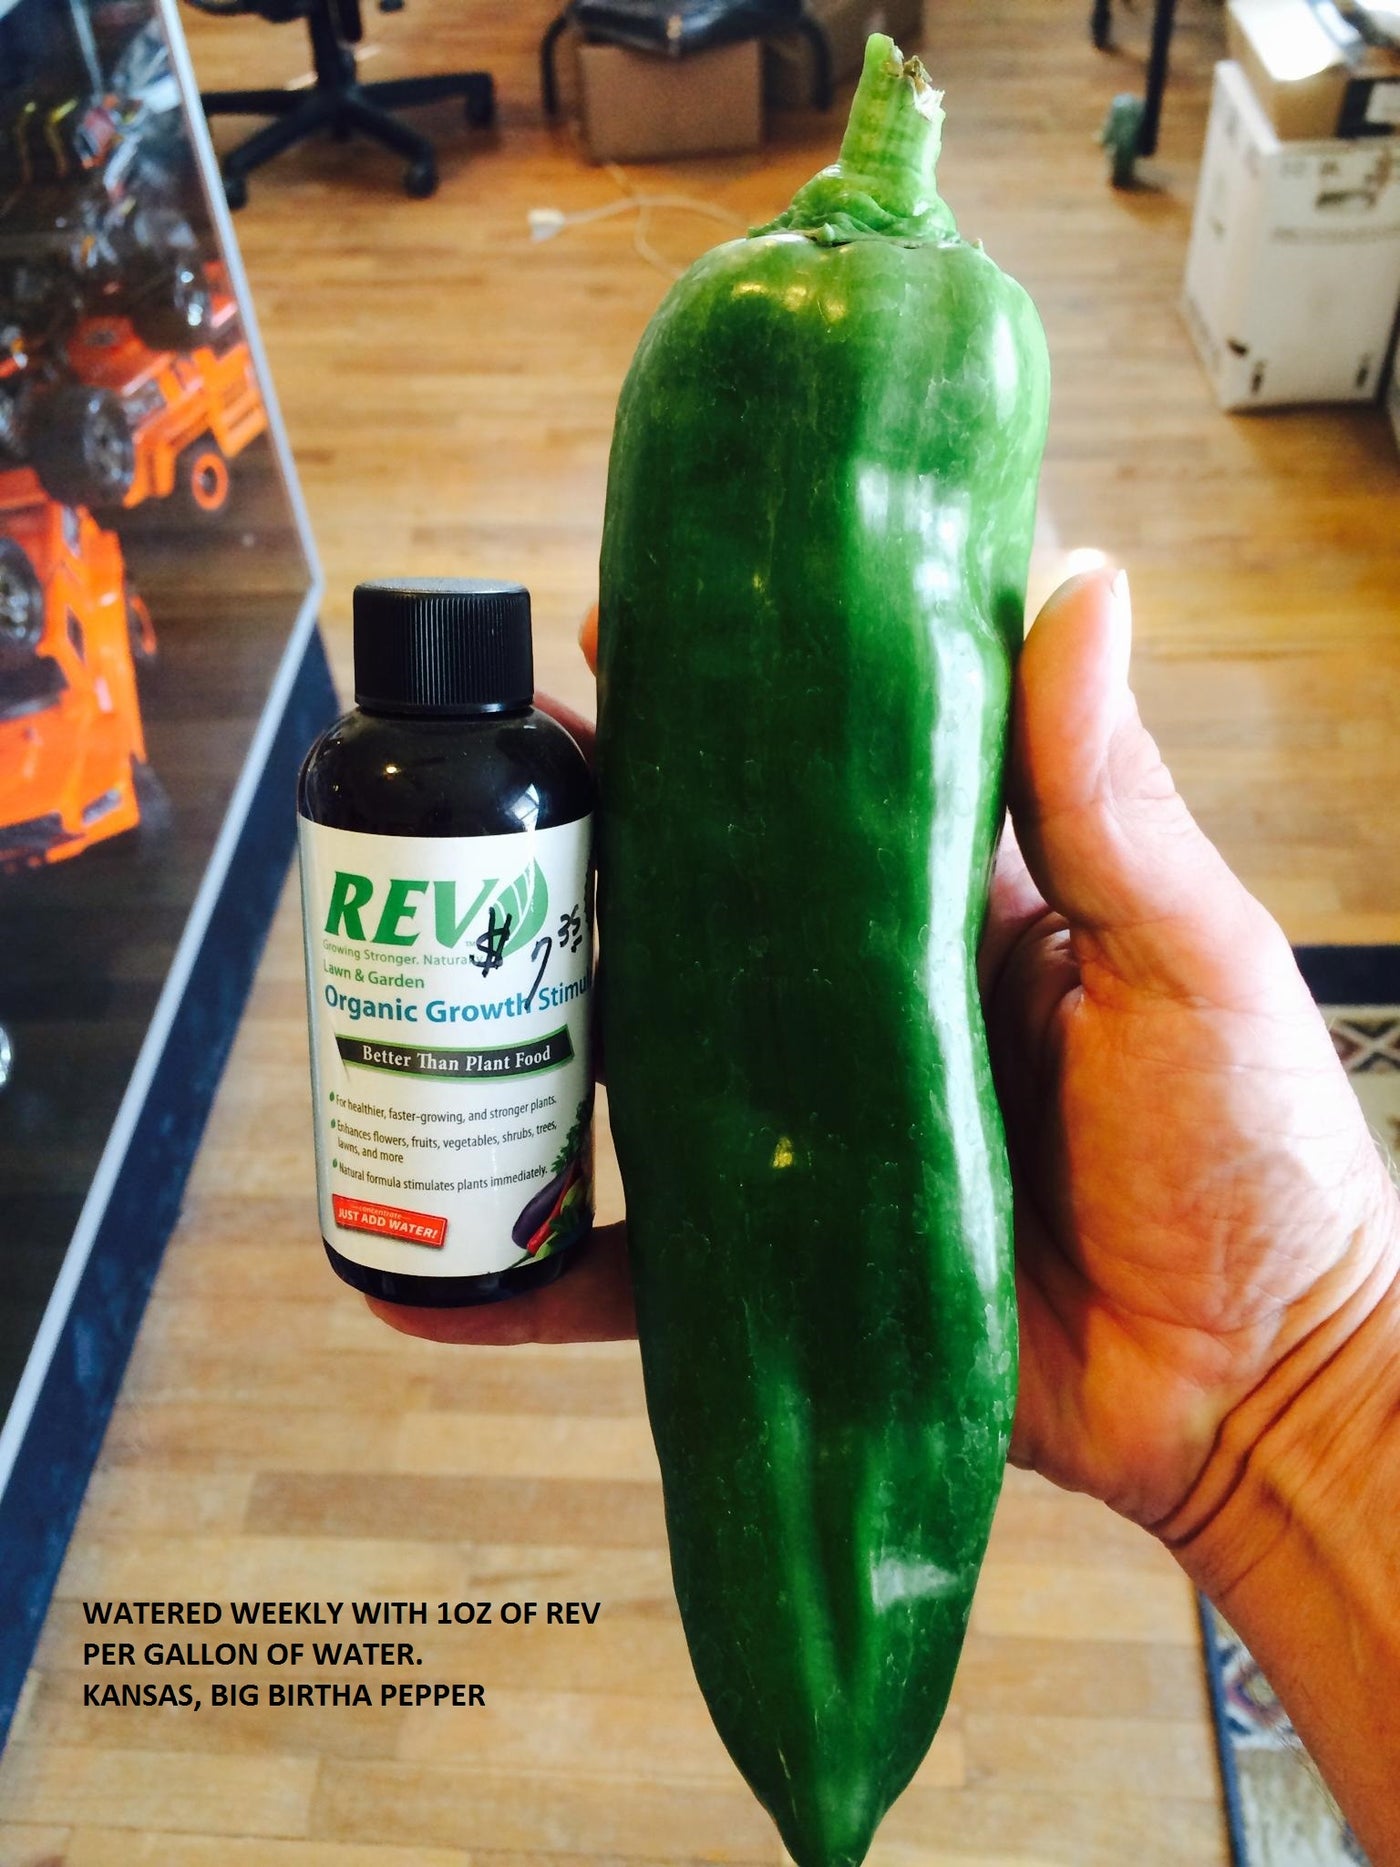 Big Bertha Pepper with Dakota REV Organic Growth Stimulant